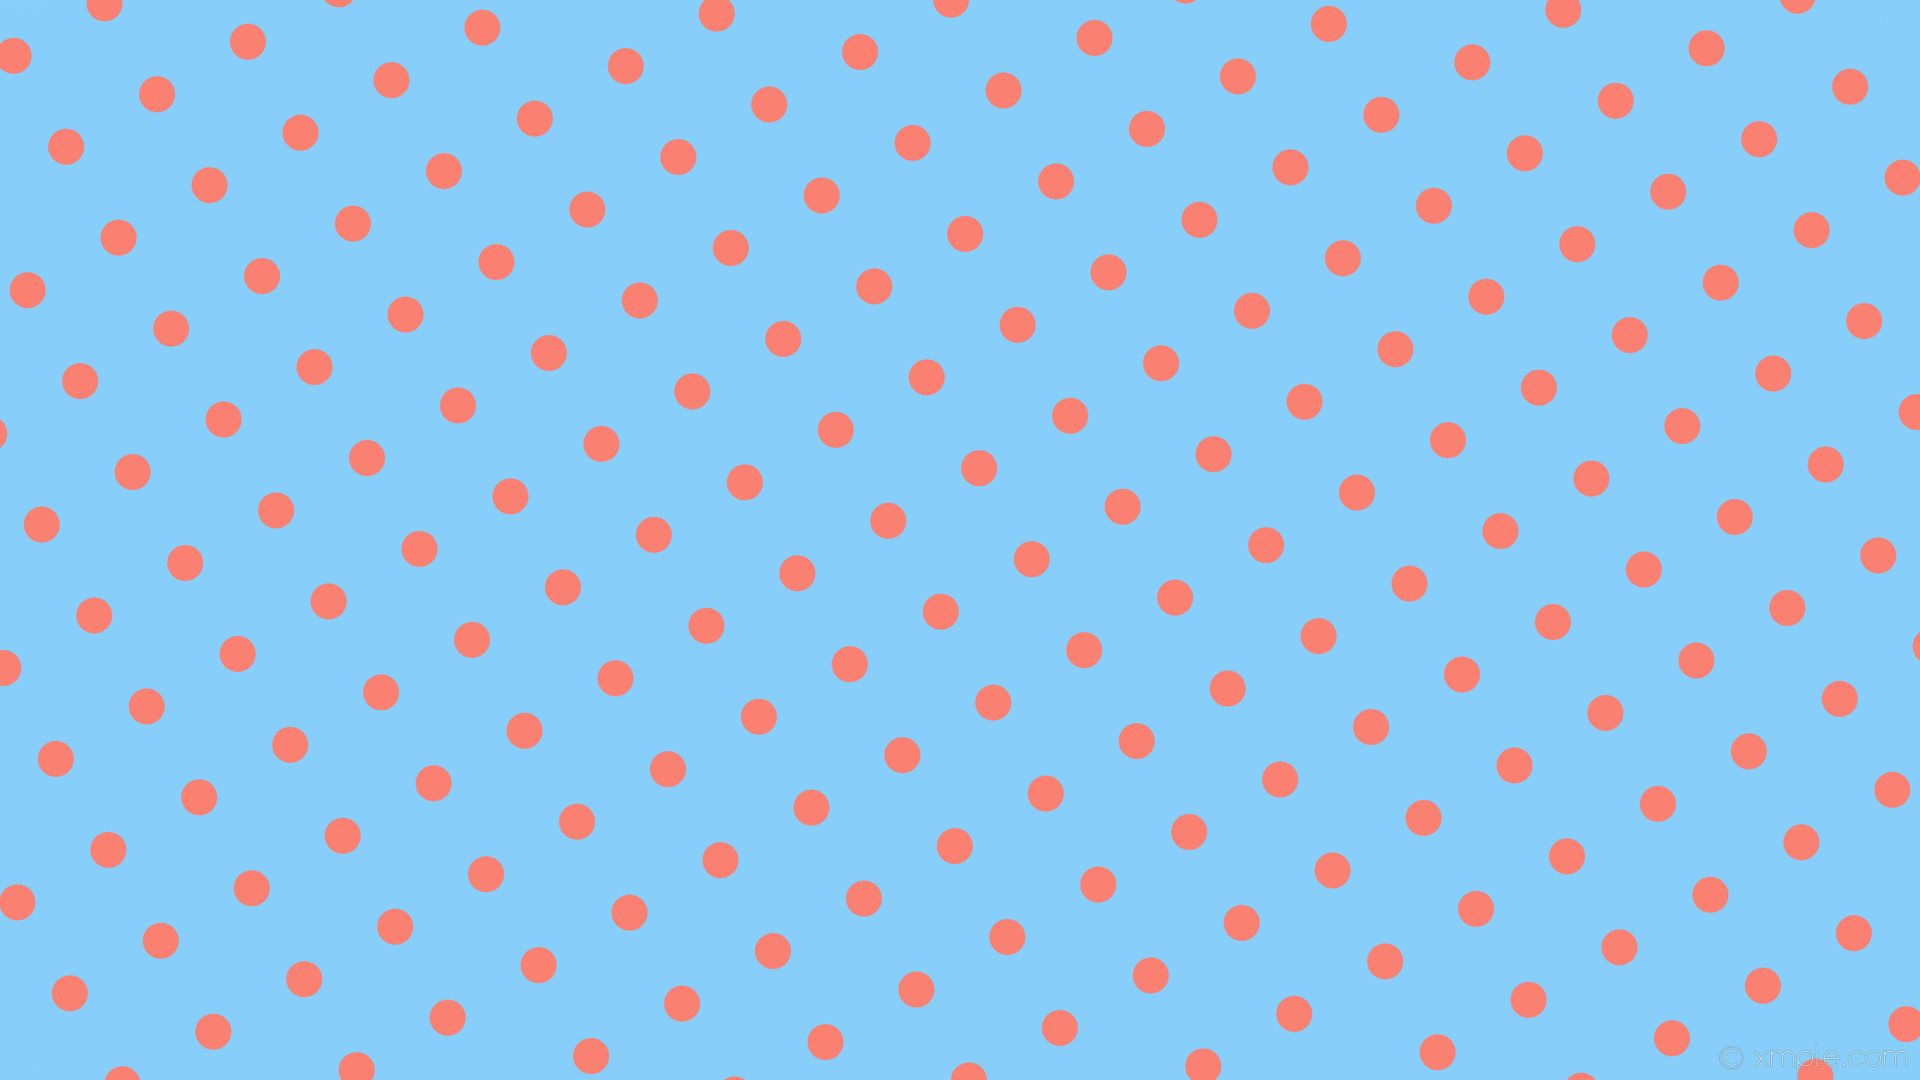 1920x1080 wallpaper red polka dots blue spots light sky blue salmon #87cefa #fa8072  300Â°